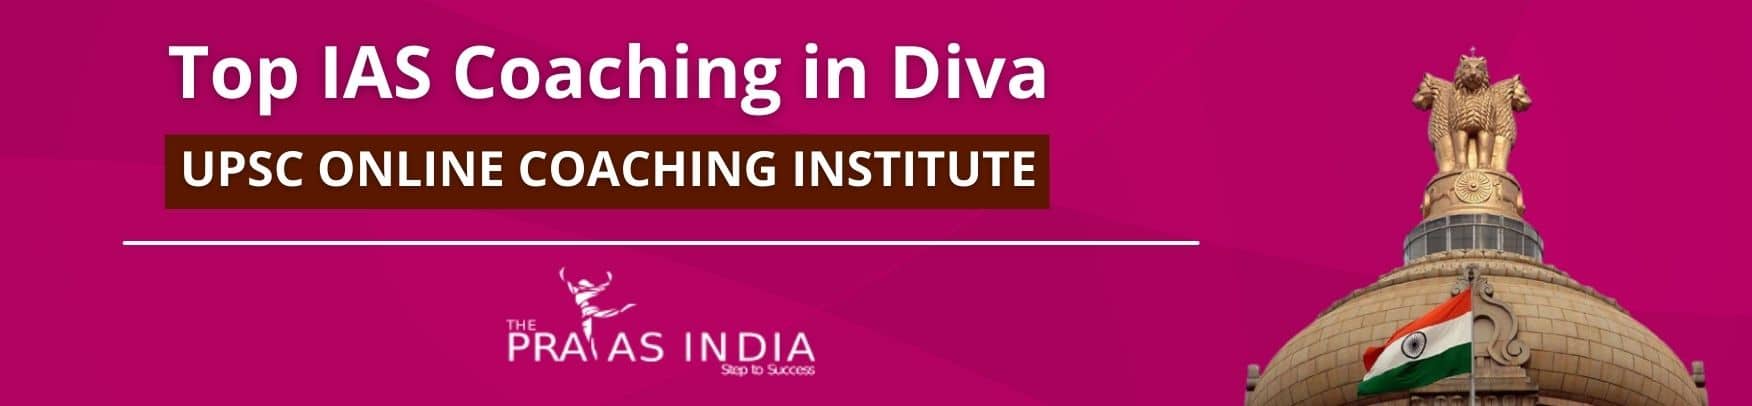 Top IAS Coaching in Diva